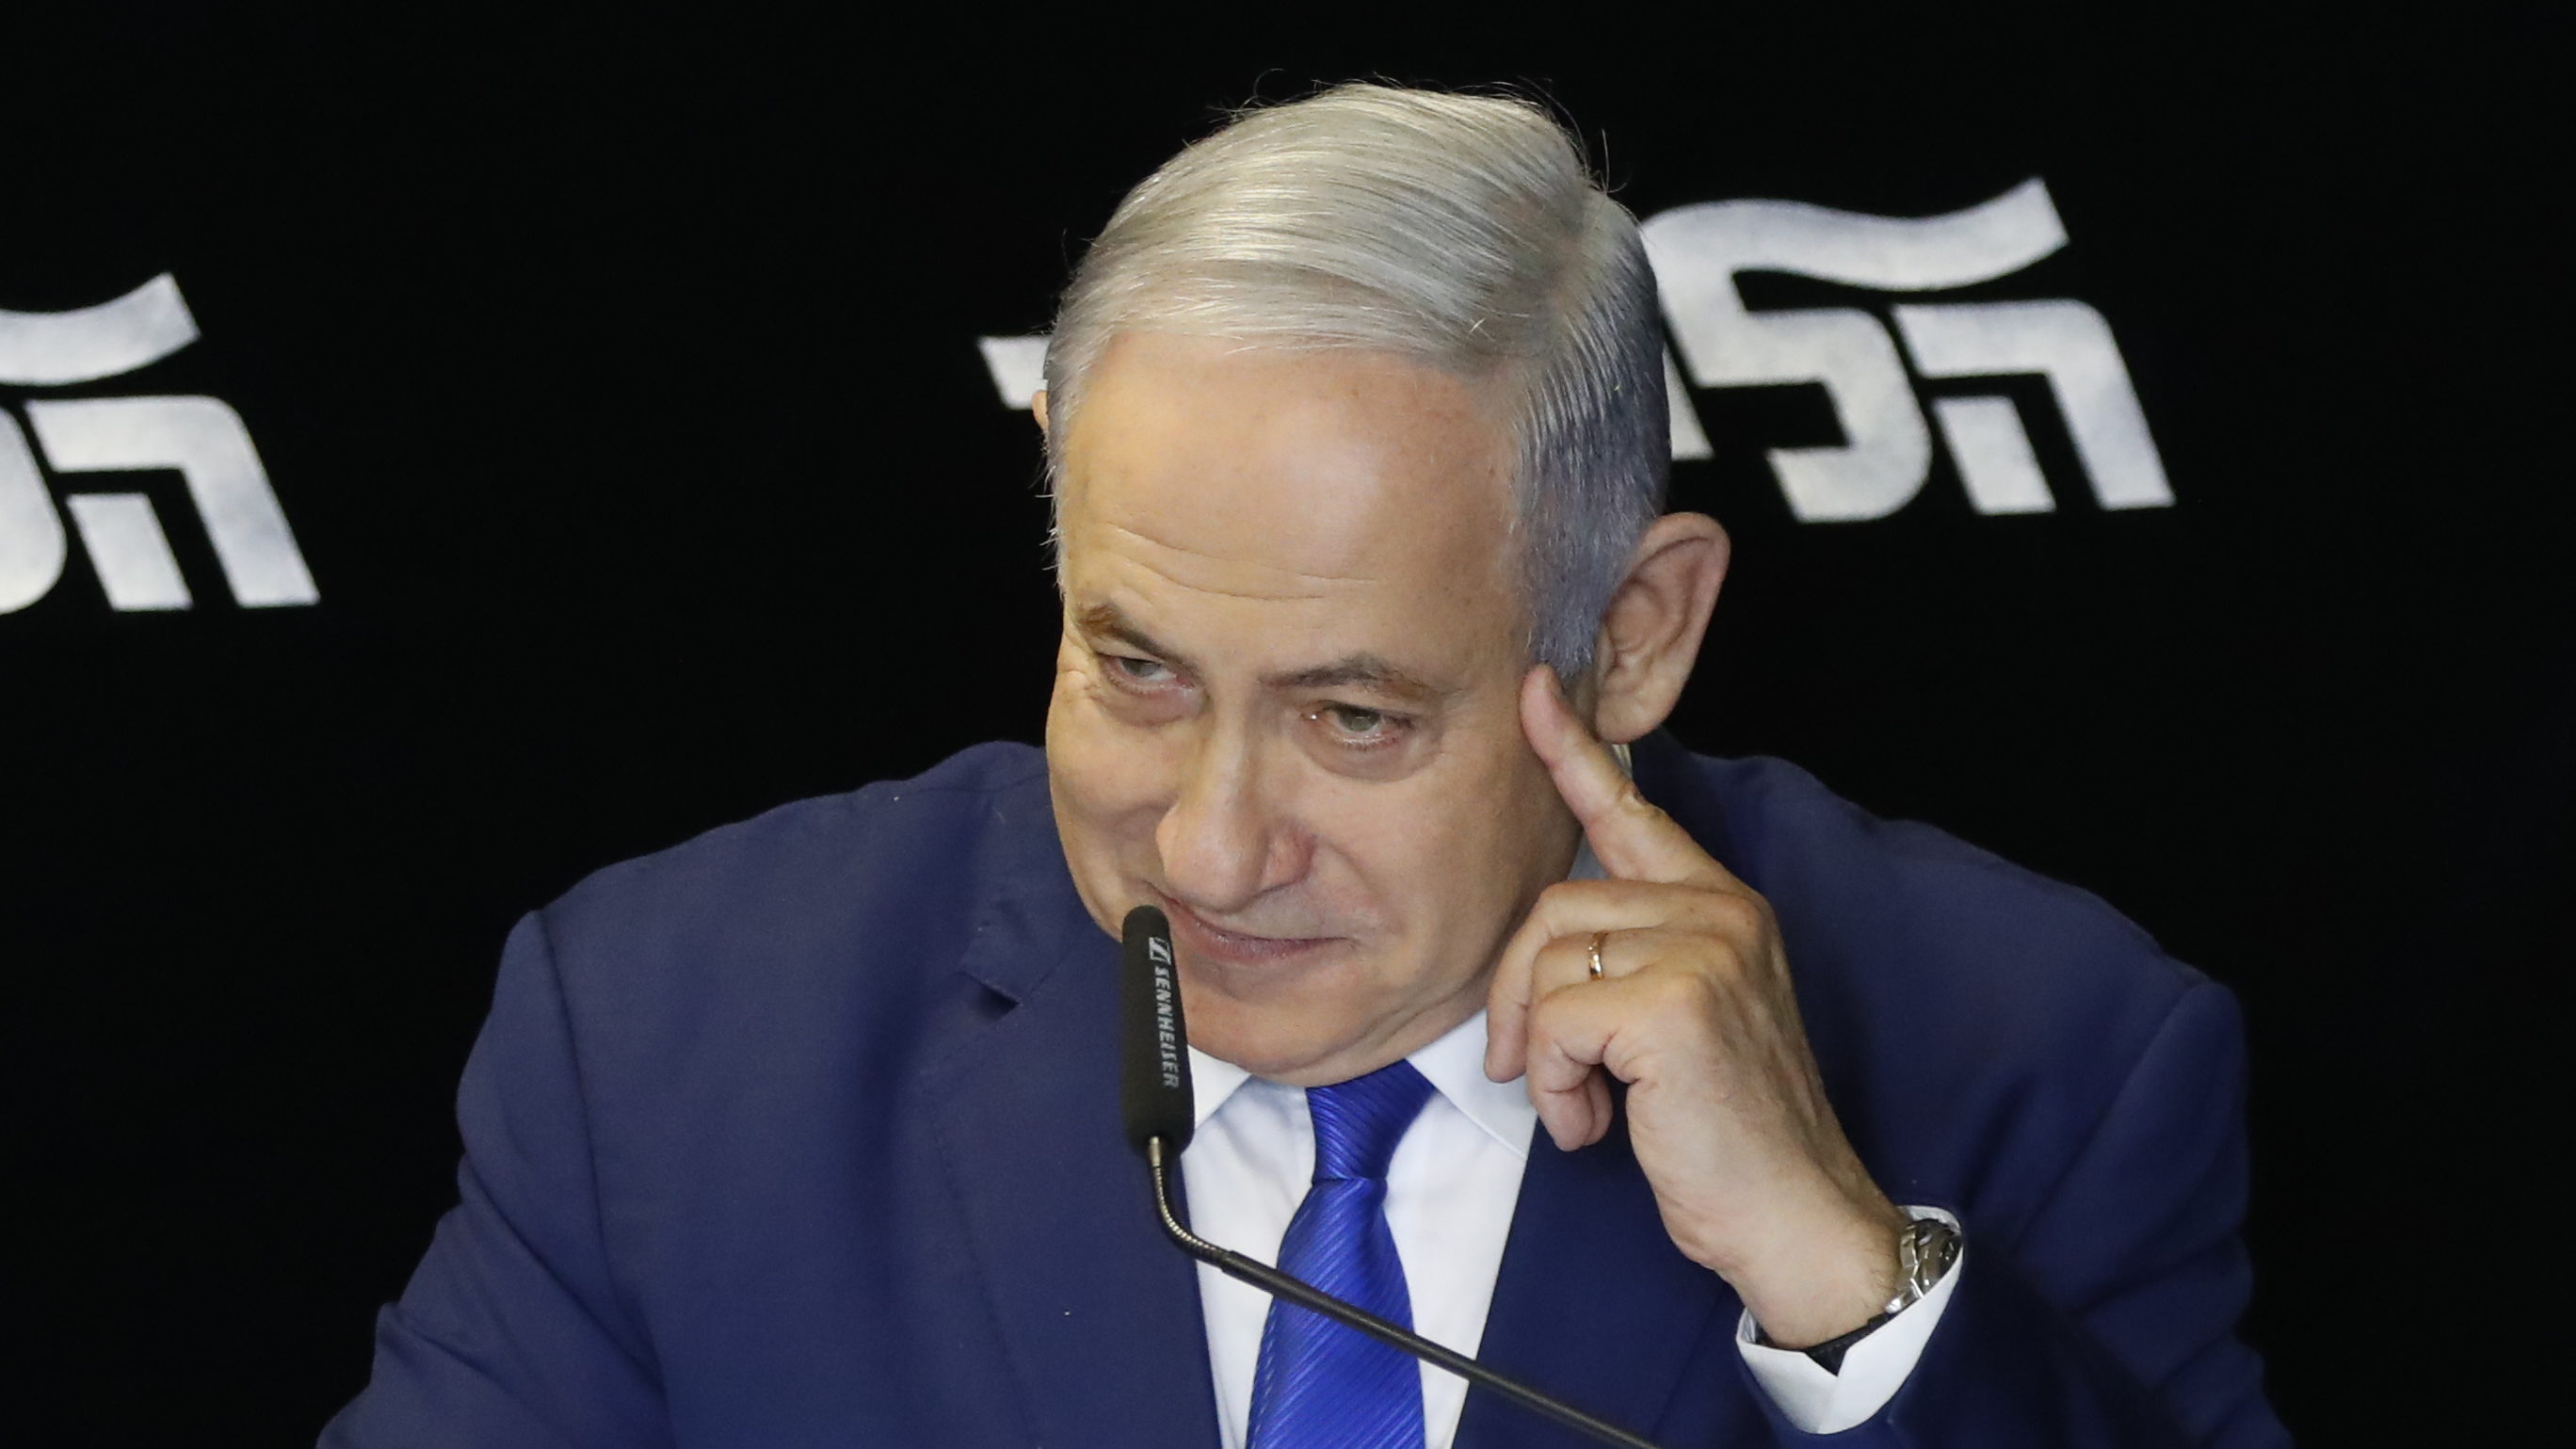 Netanyahu Remains at Helm of Israel’s Likud after Leadership Challenge